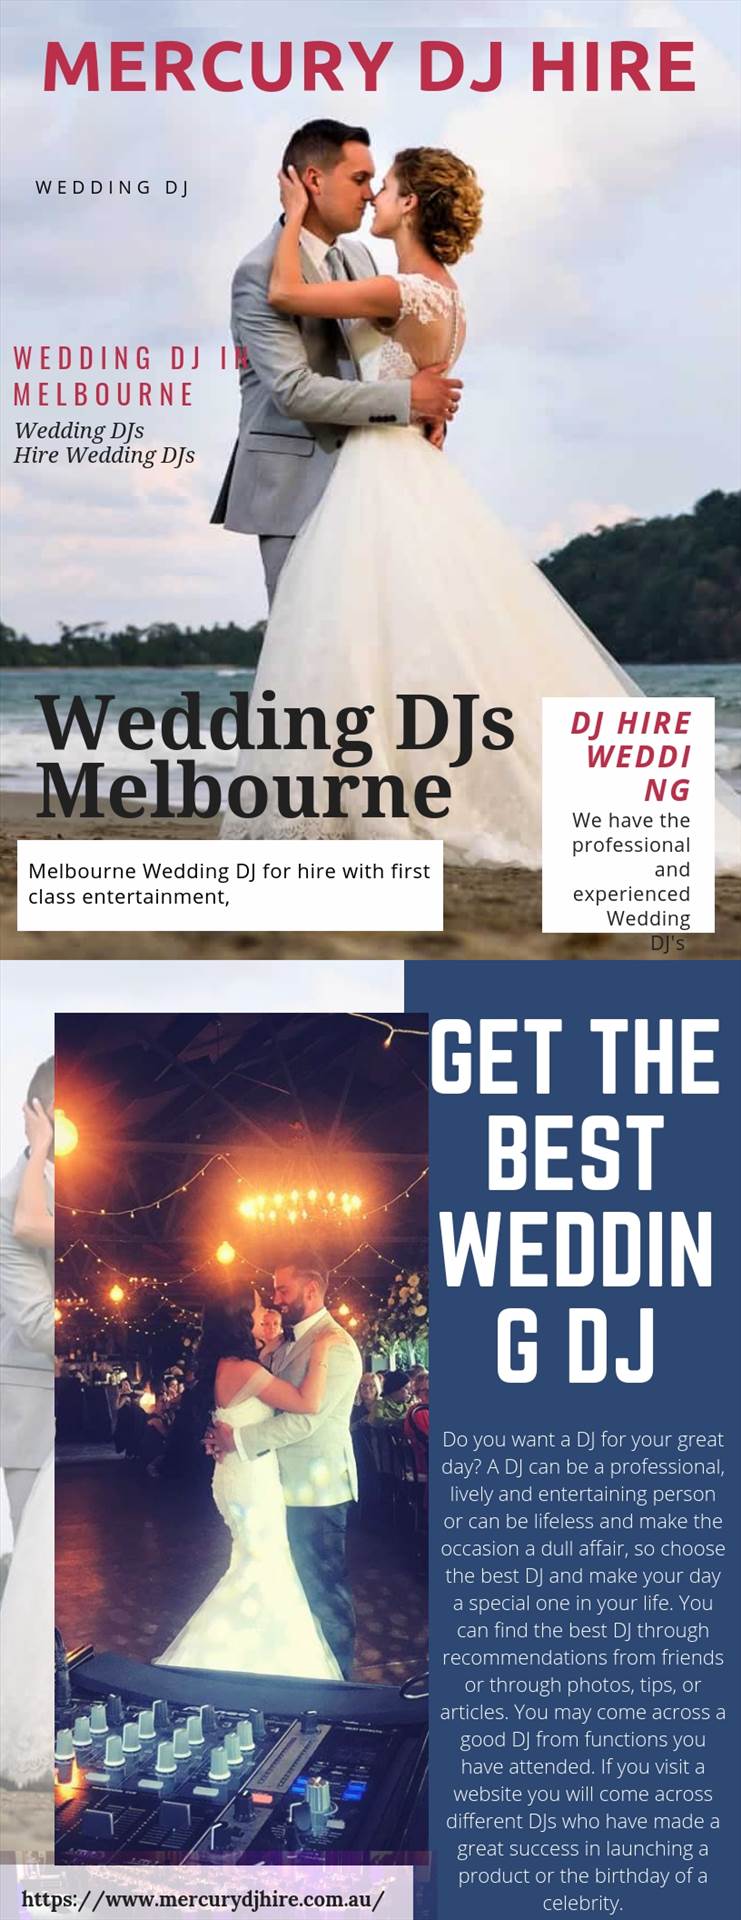 Wedding DJ Melbourne.jpg  by Mercurydjhire